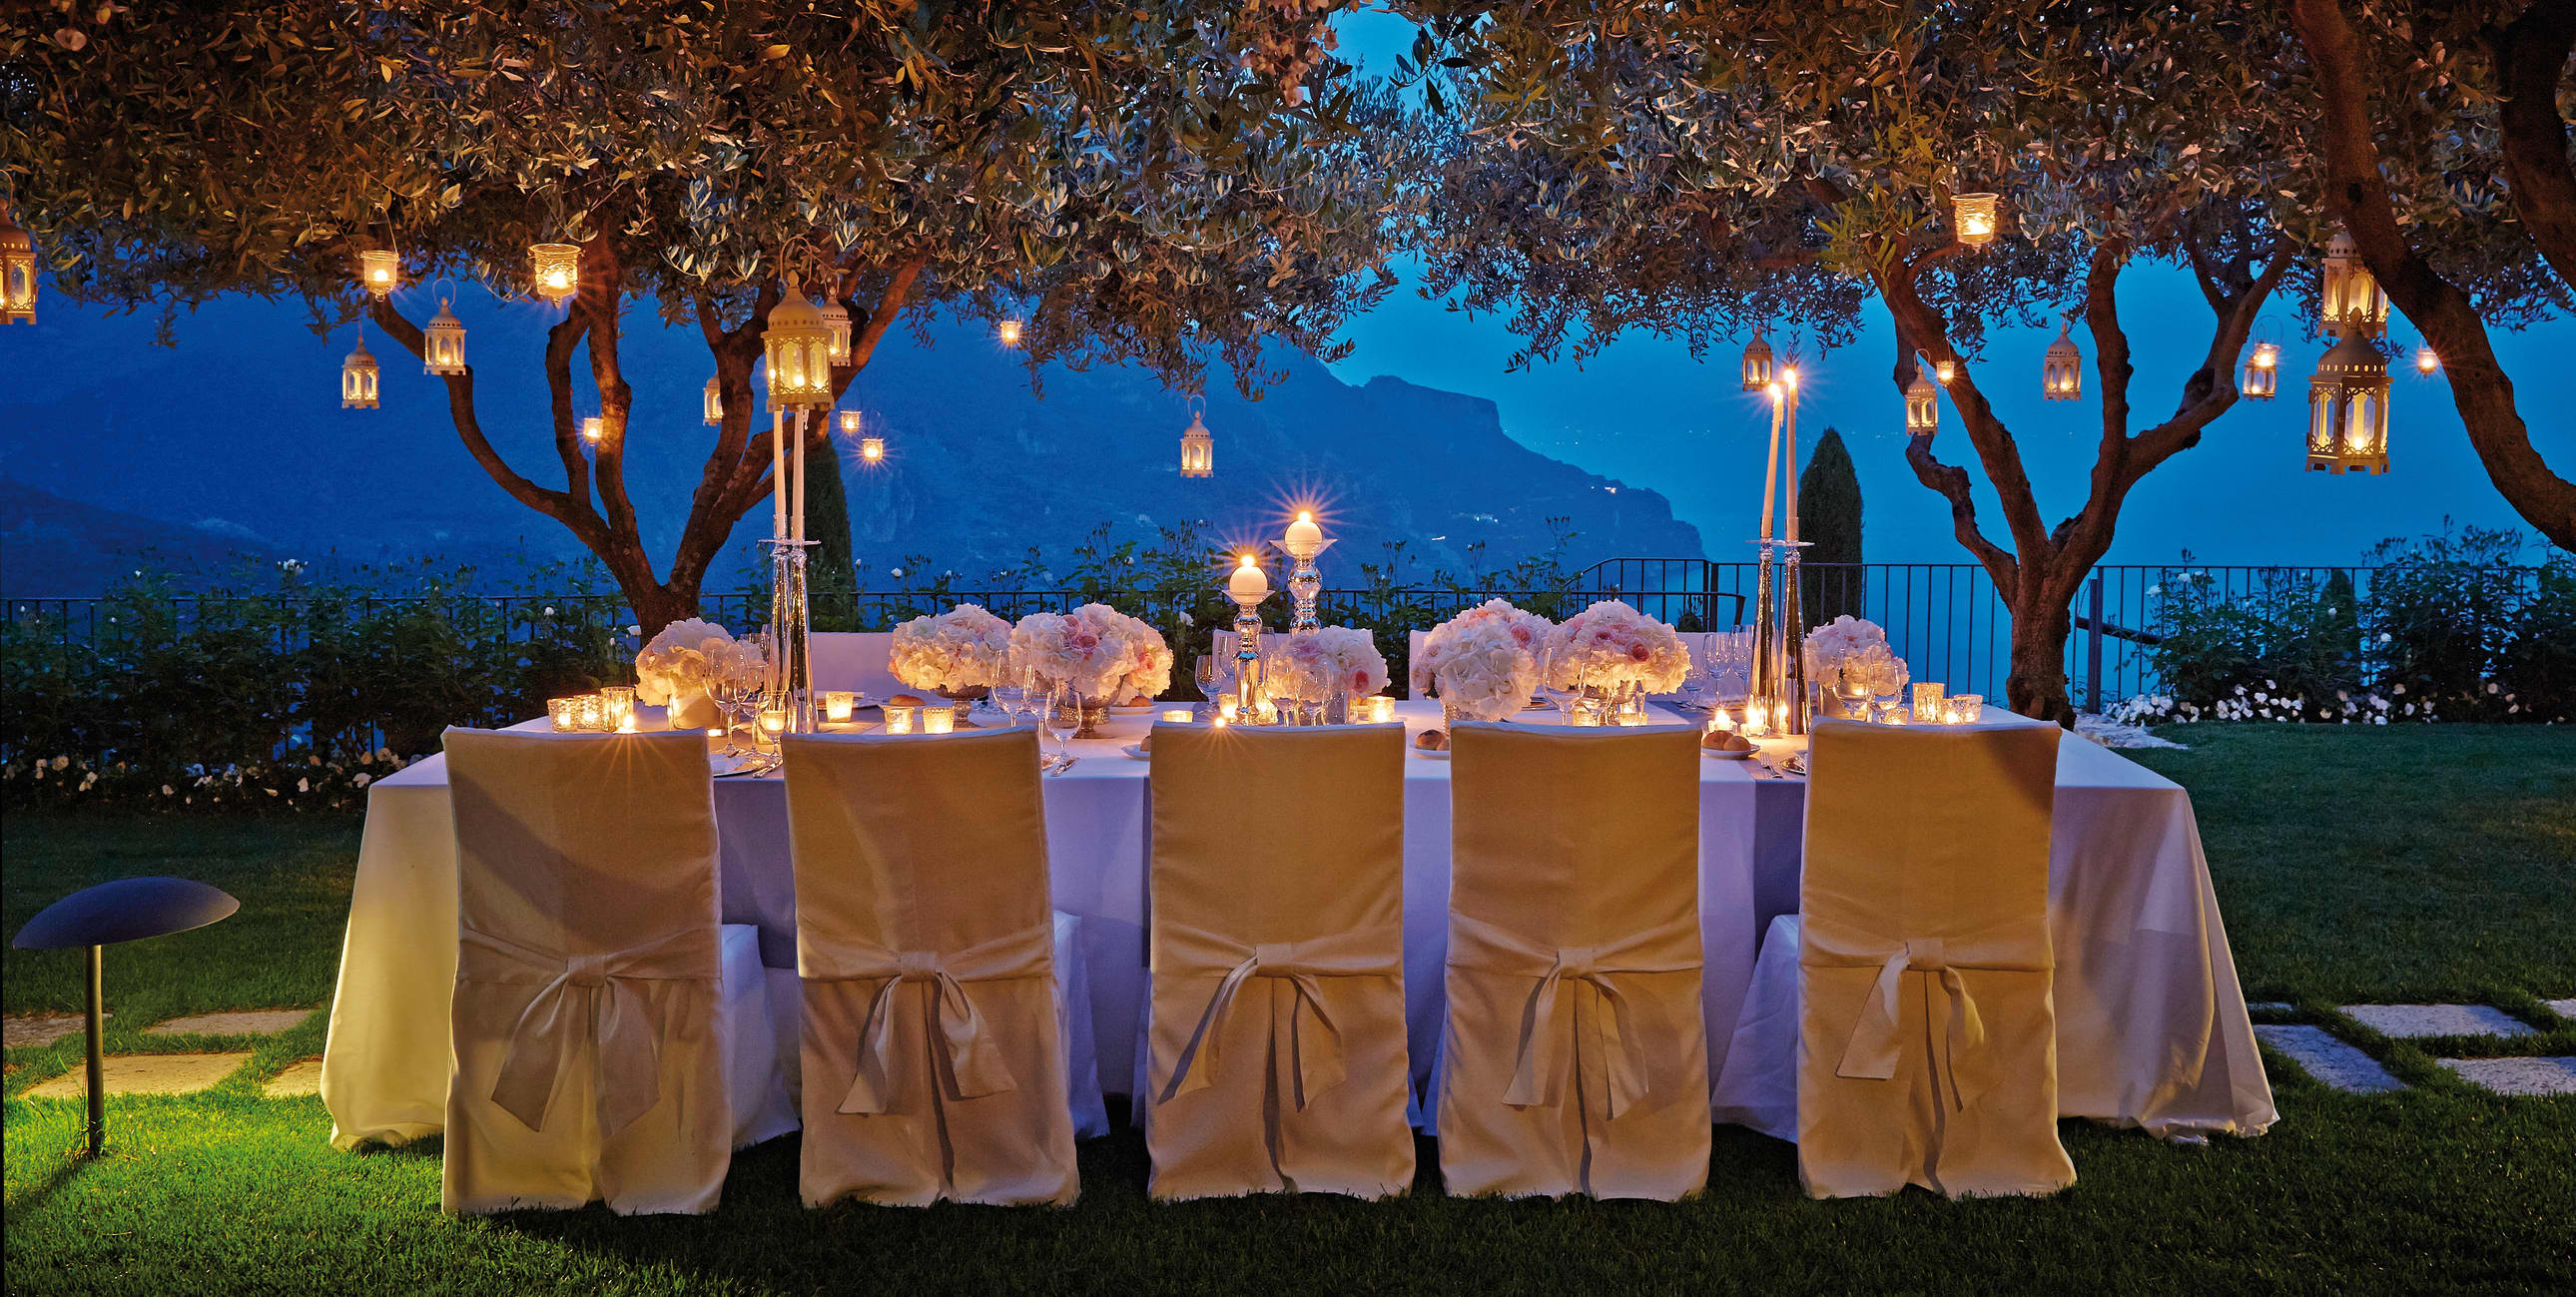 Hotel Splendido for Portofino Weddings: Italian Riviera